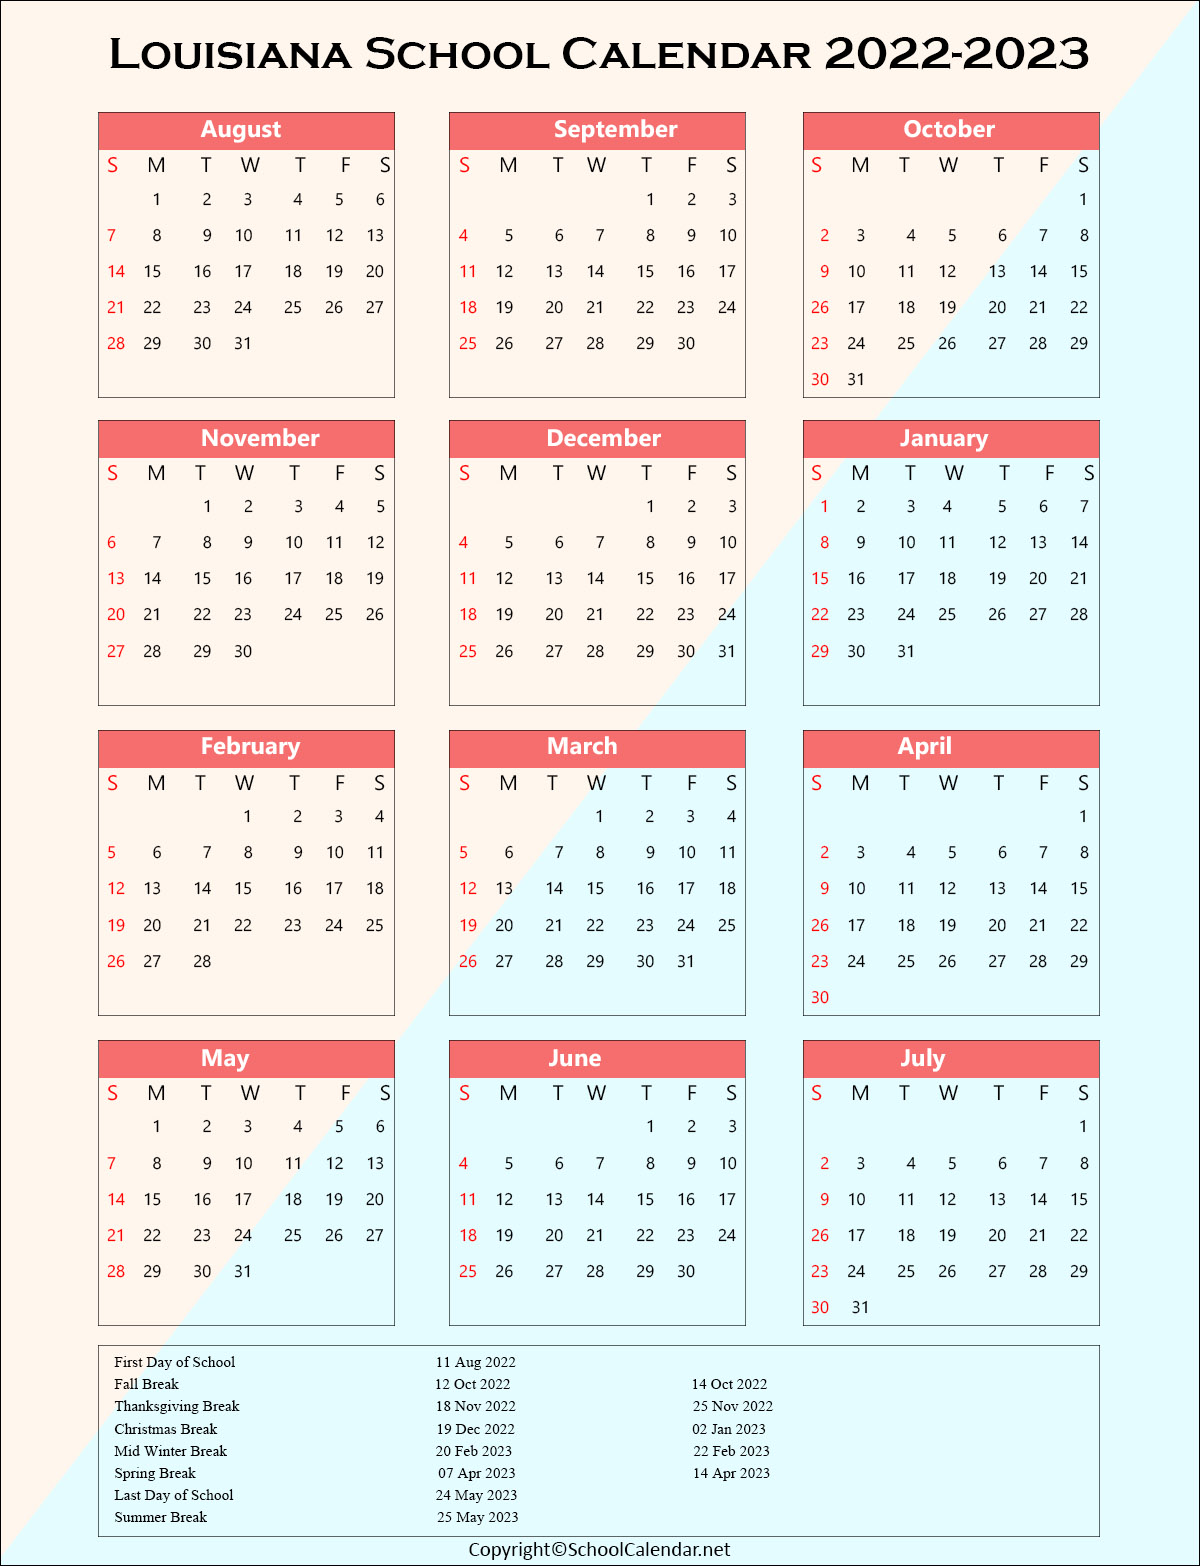 Louisiana School Holiday Calendar 2022